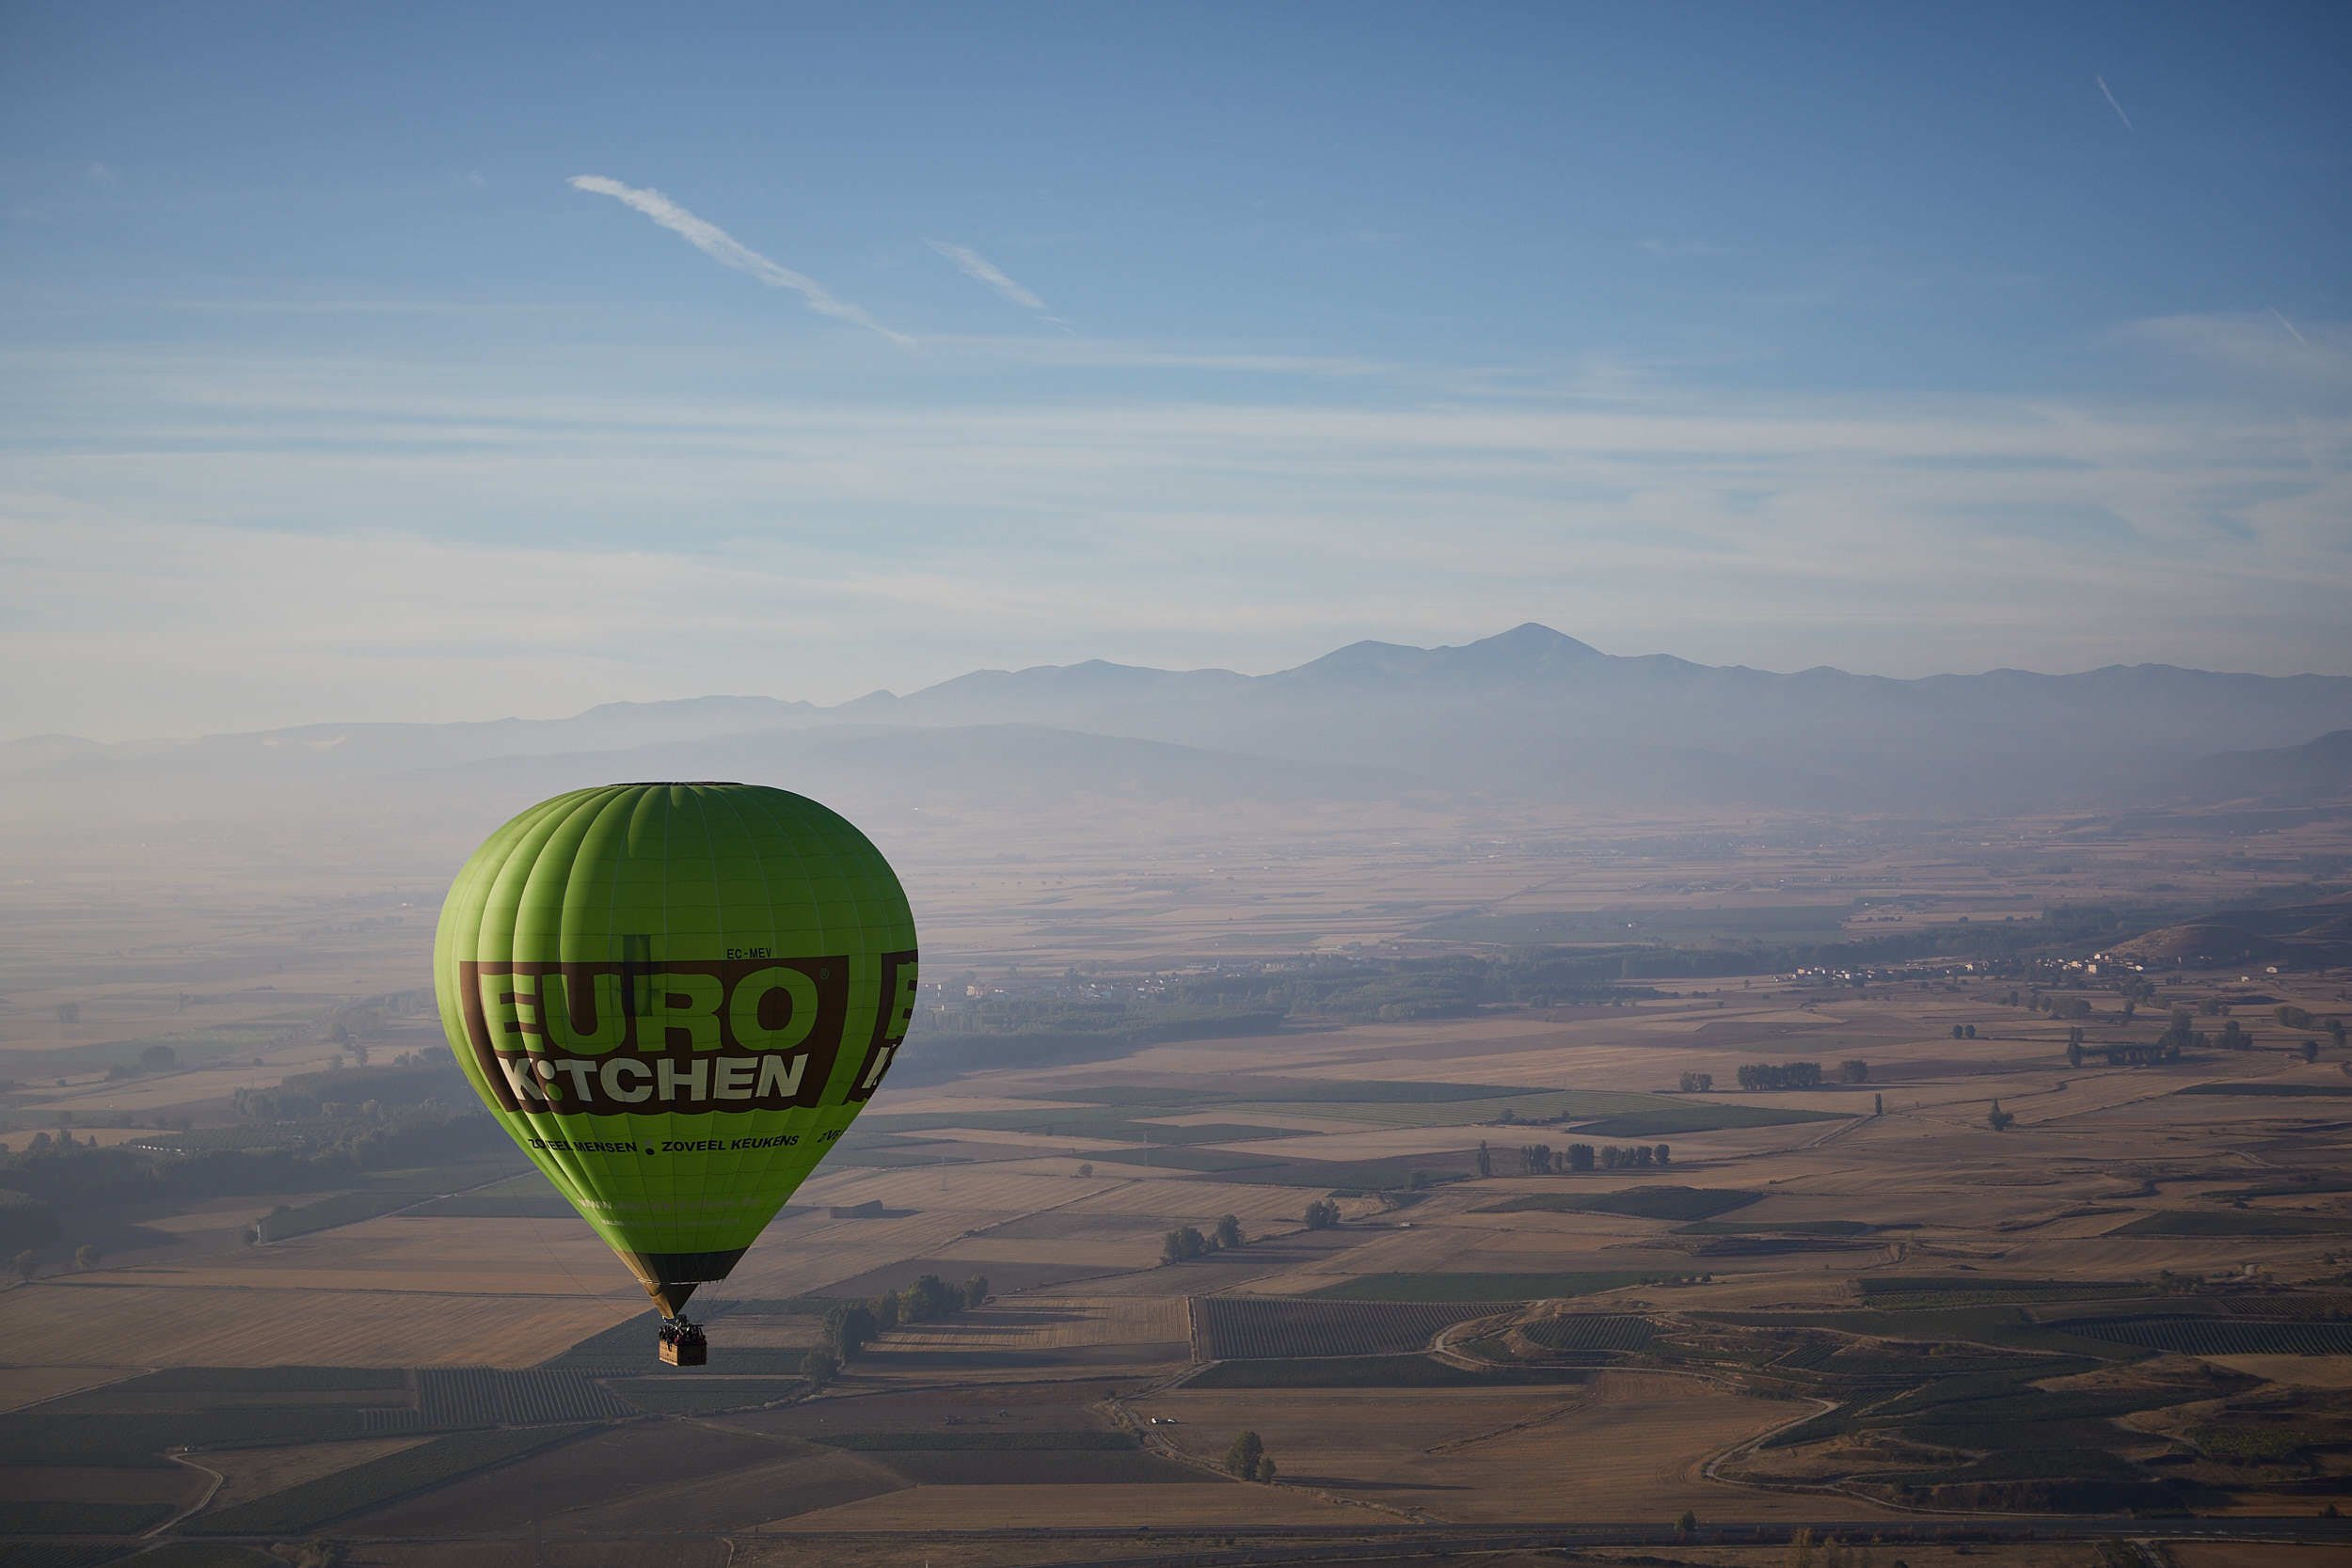 8/10/16 Balloon ride near Casalarreina (La Rioja) with peak of Mount San Lorenzo in background. Photo by James Sturcke sturcke.org